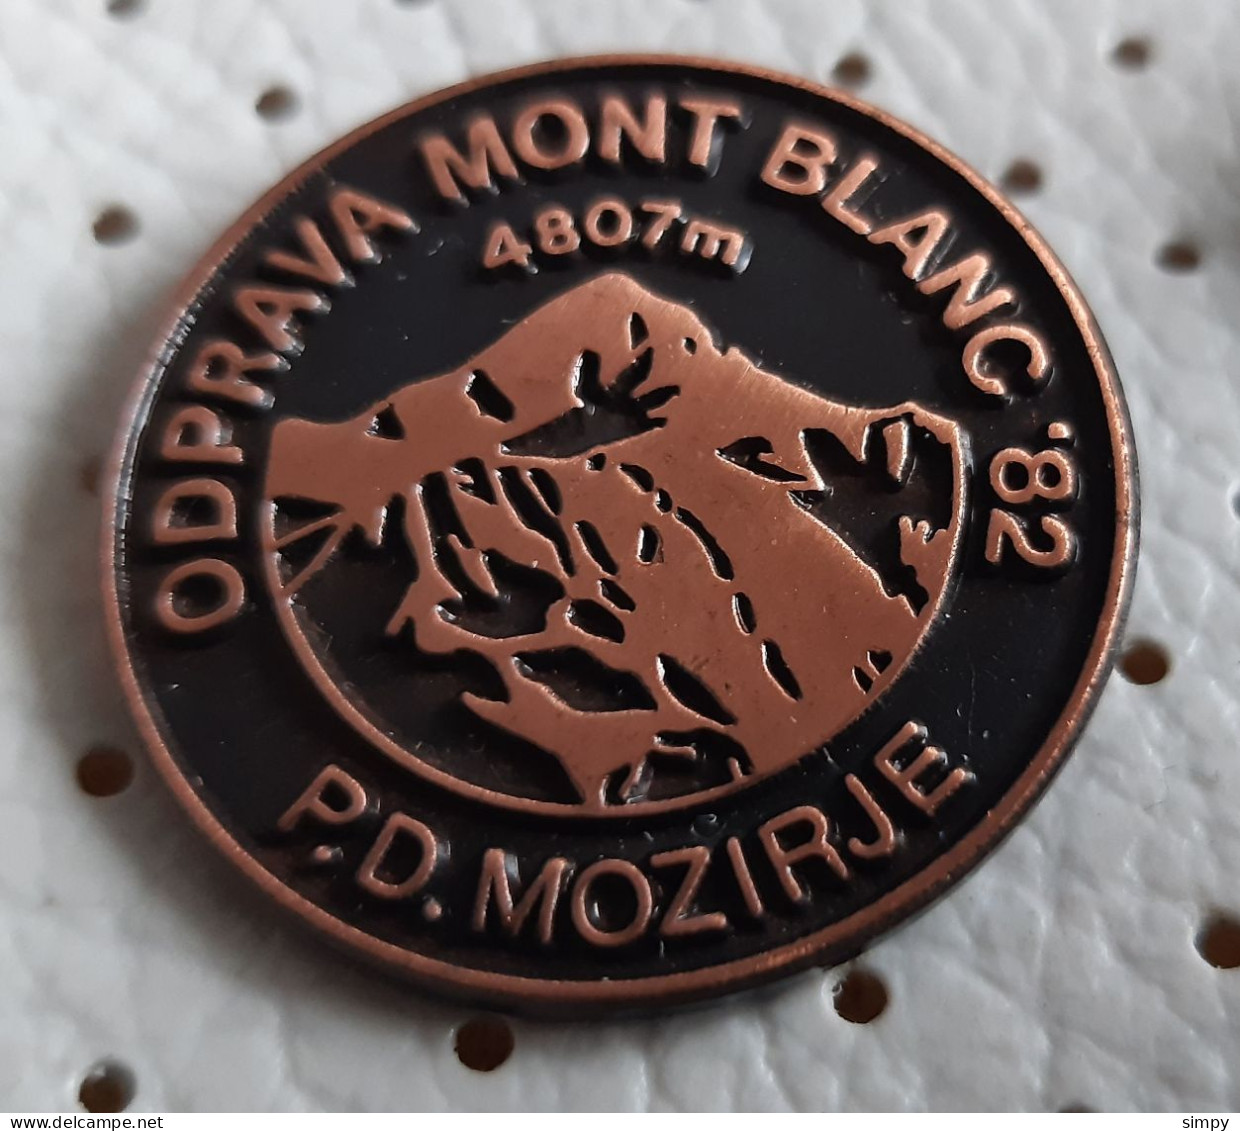 Yugoslav Expedition MONT BLANC 4807m  1982 PD Mozirje Slovenia Alpinism Mountaineering Pin - Alpinism, Mountaineering